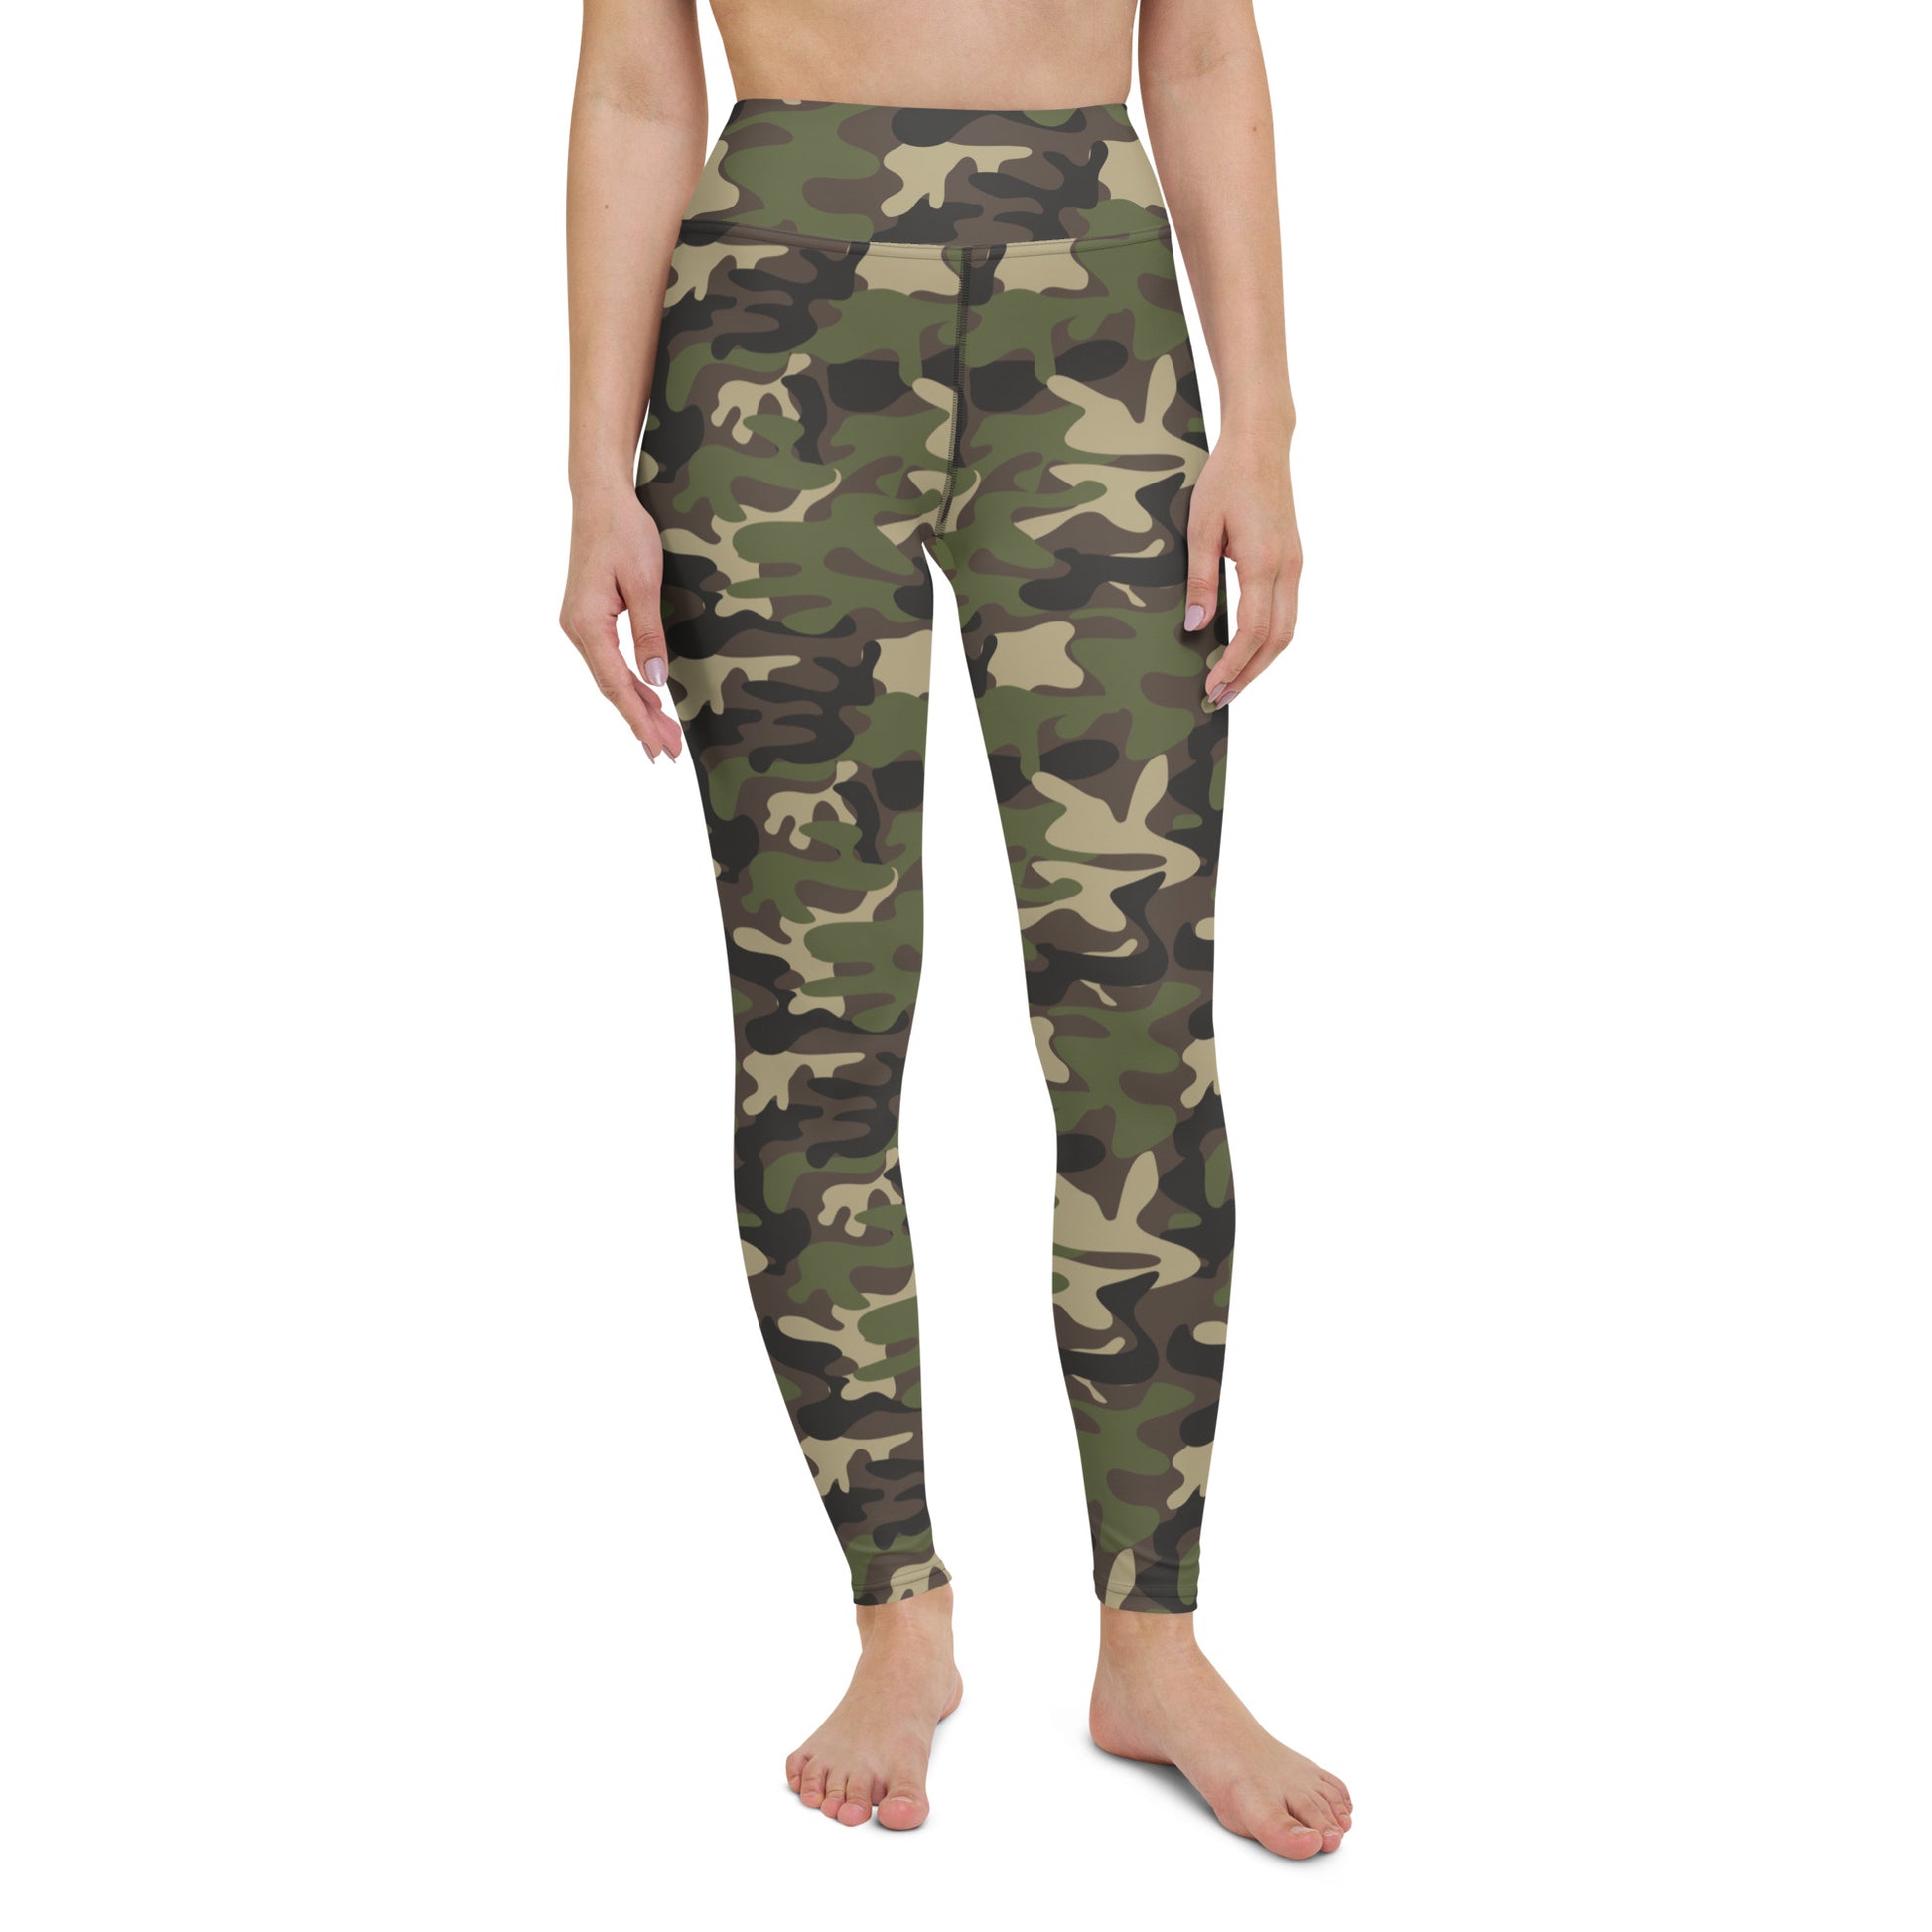 Grey Camo Yoga Leggings Women, Camouflage High Waisted Pants Cute